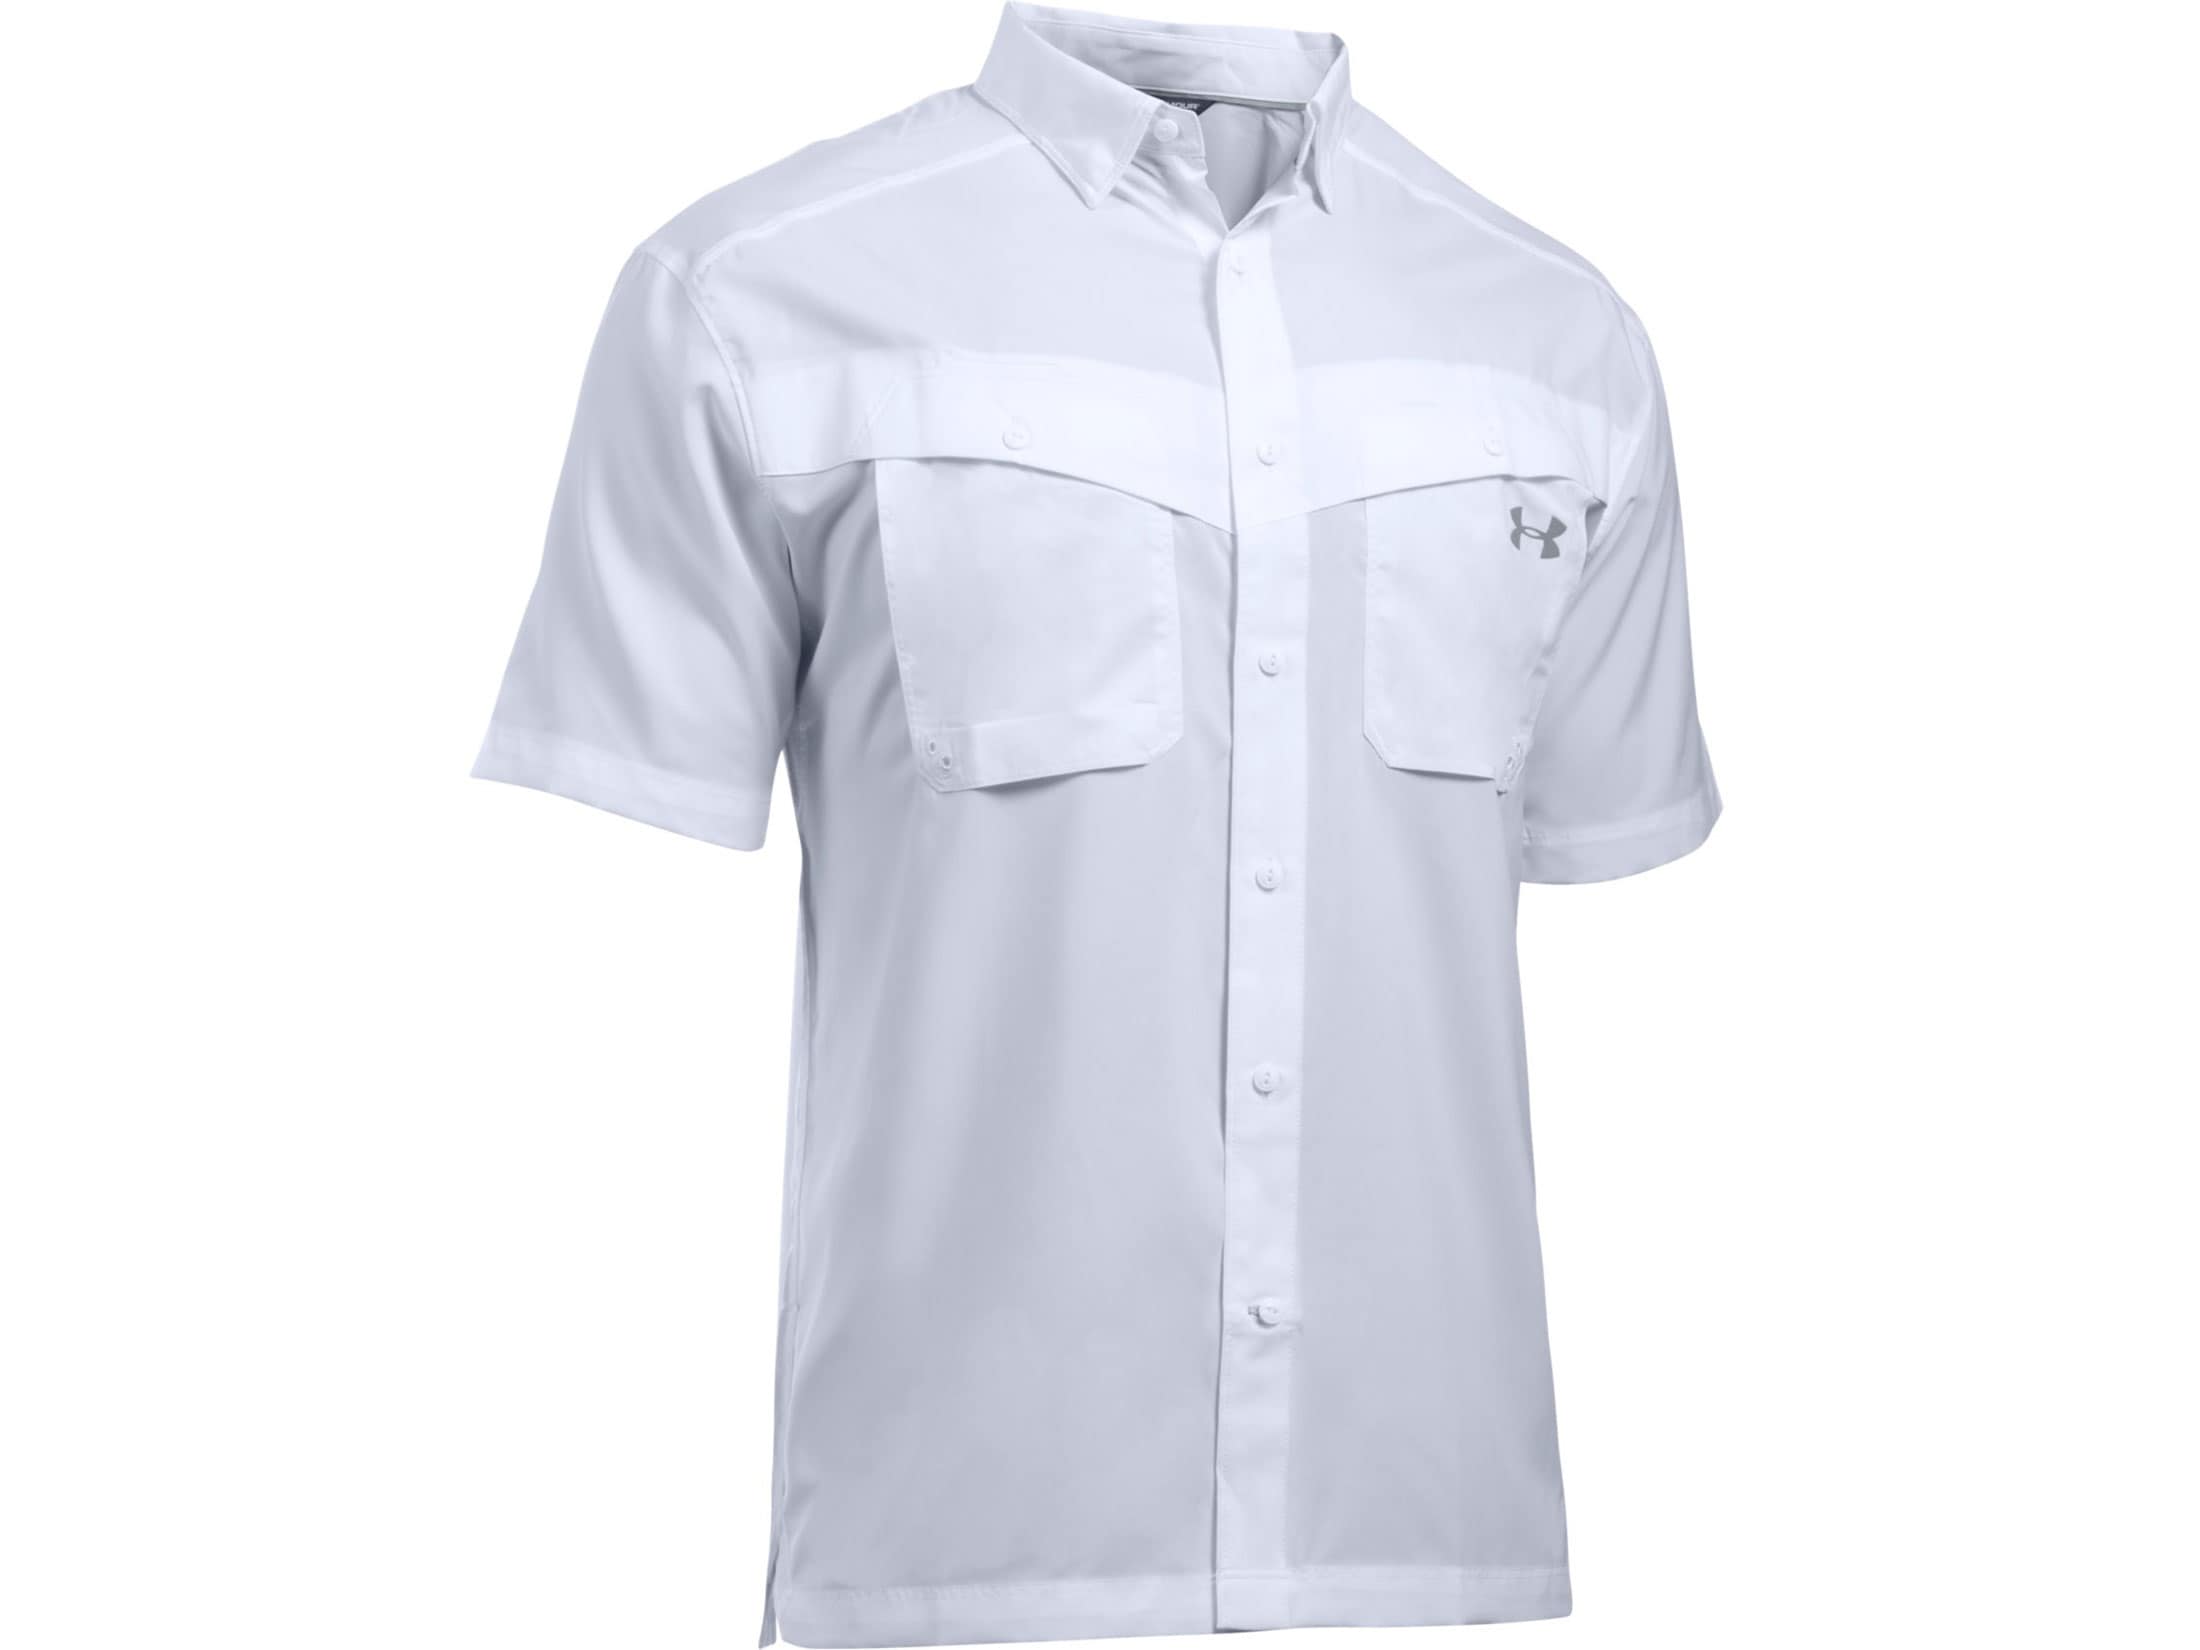 Under Armour Men's UA Tide Chaser Button-Up Shirt Short Sleeve